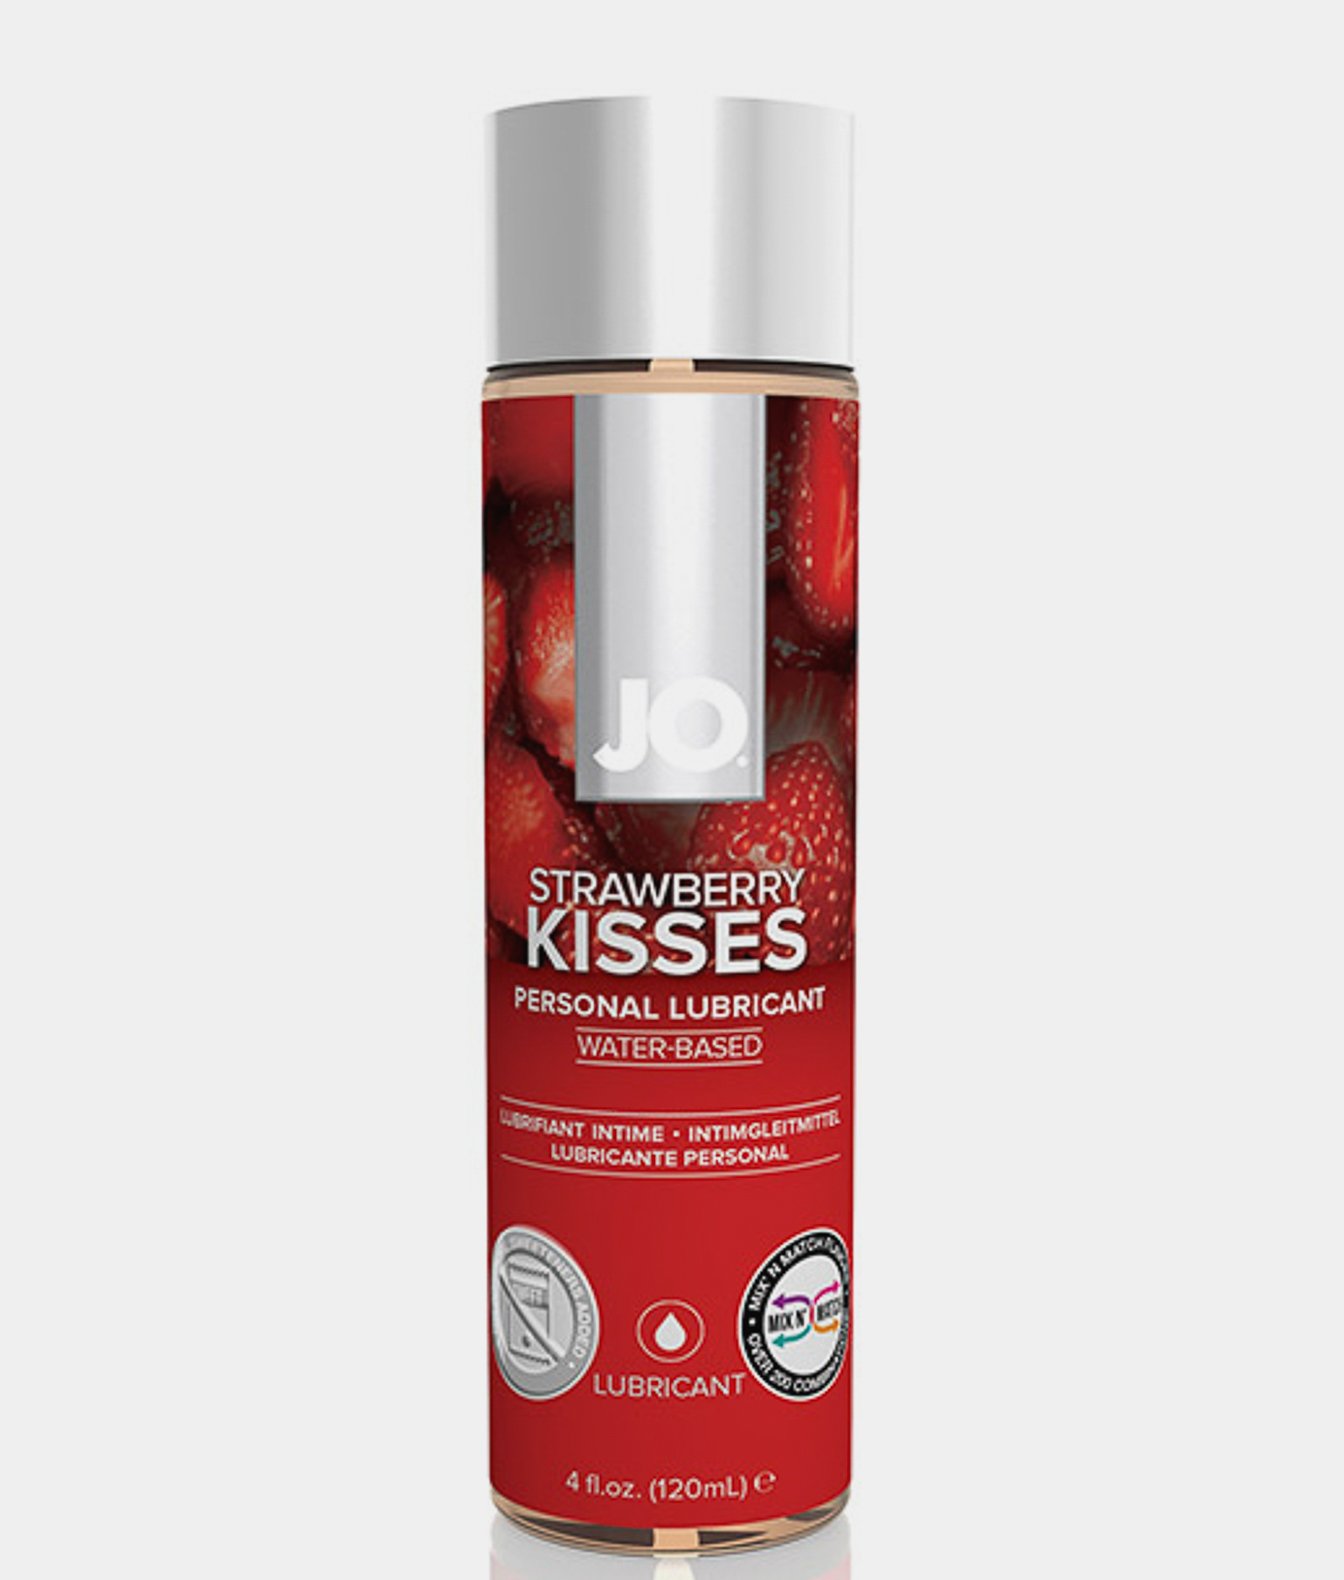 System JO H2O strawberry kisses lubrykant smakowy